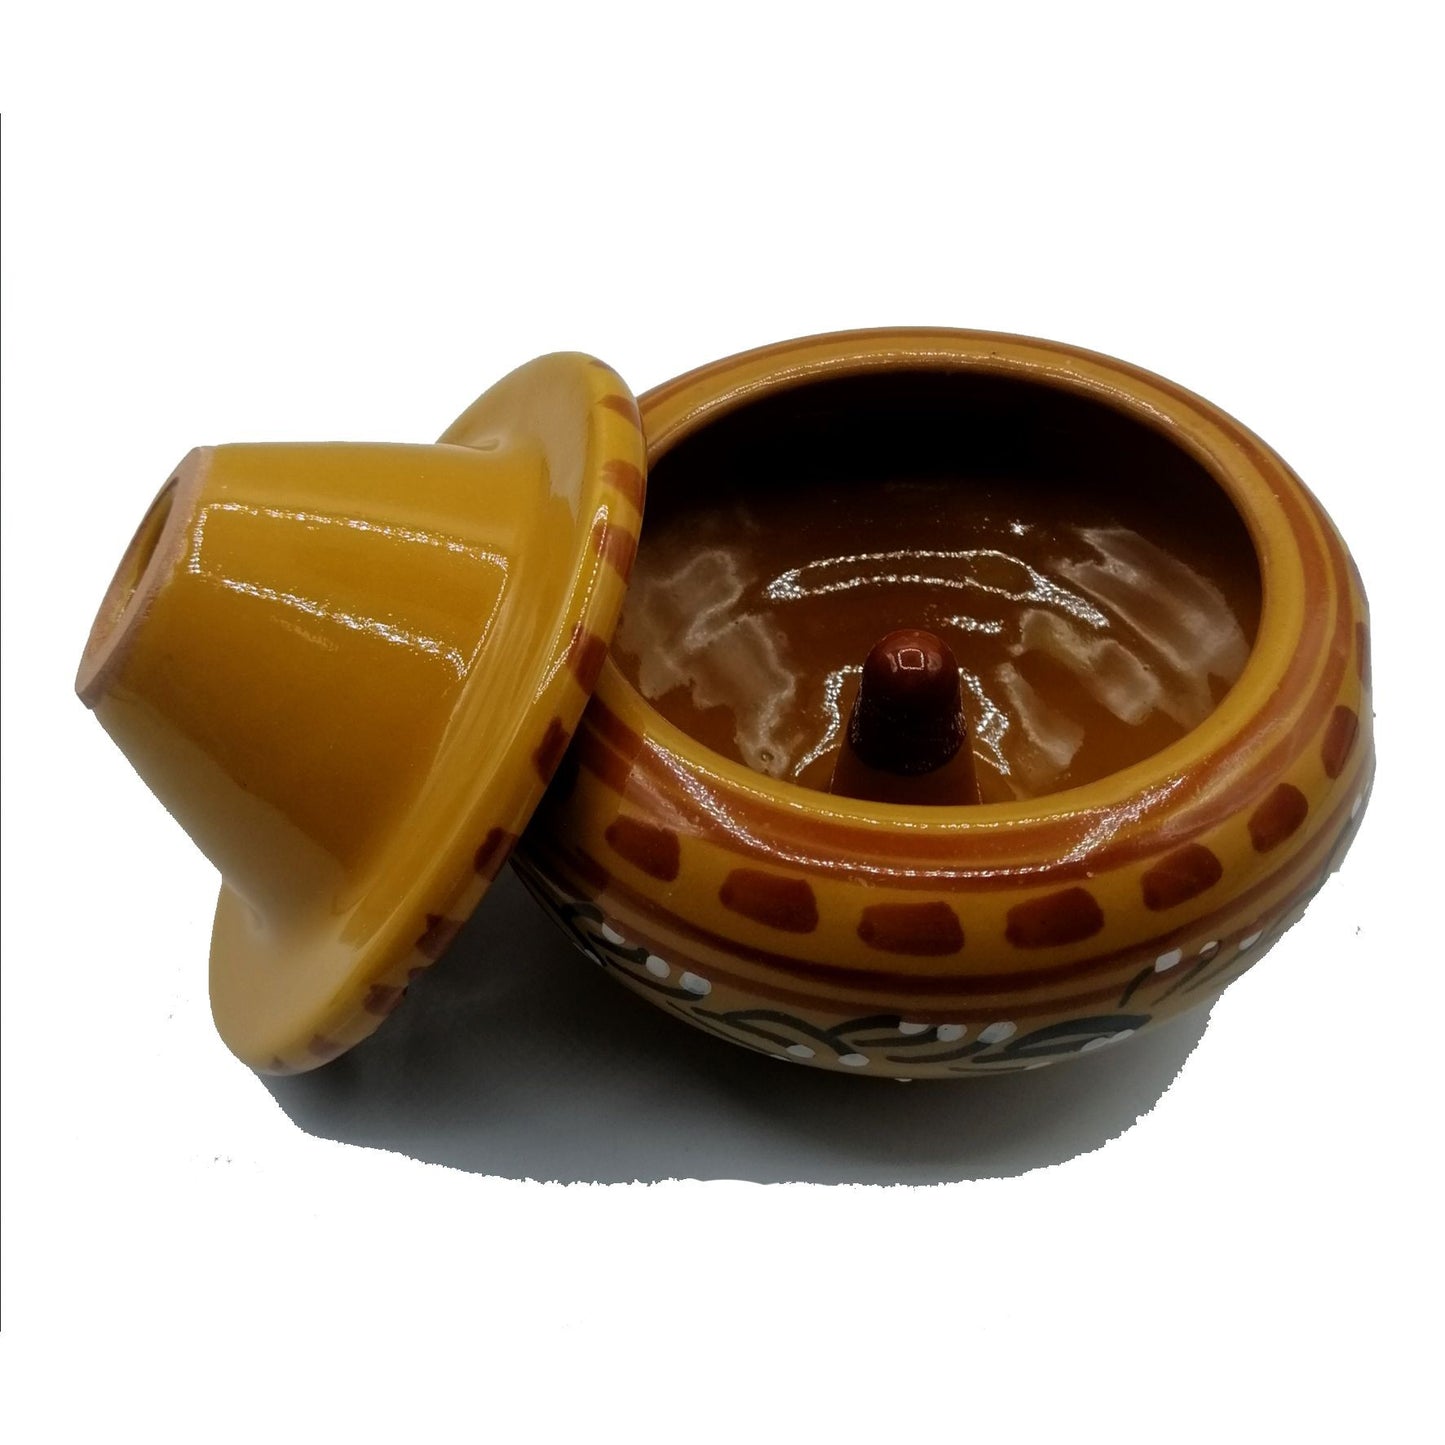 Etnico Arredo Posacenere Ceramica Antiodore Tunisina Marocchina 1011200814